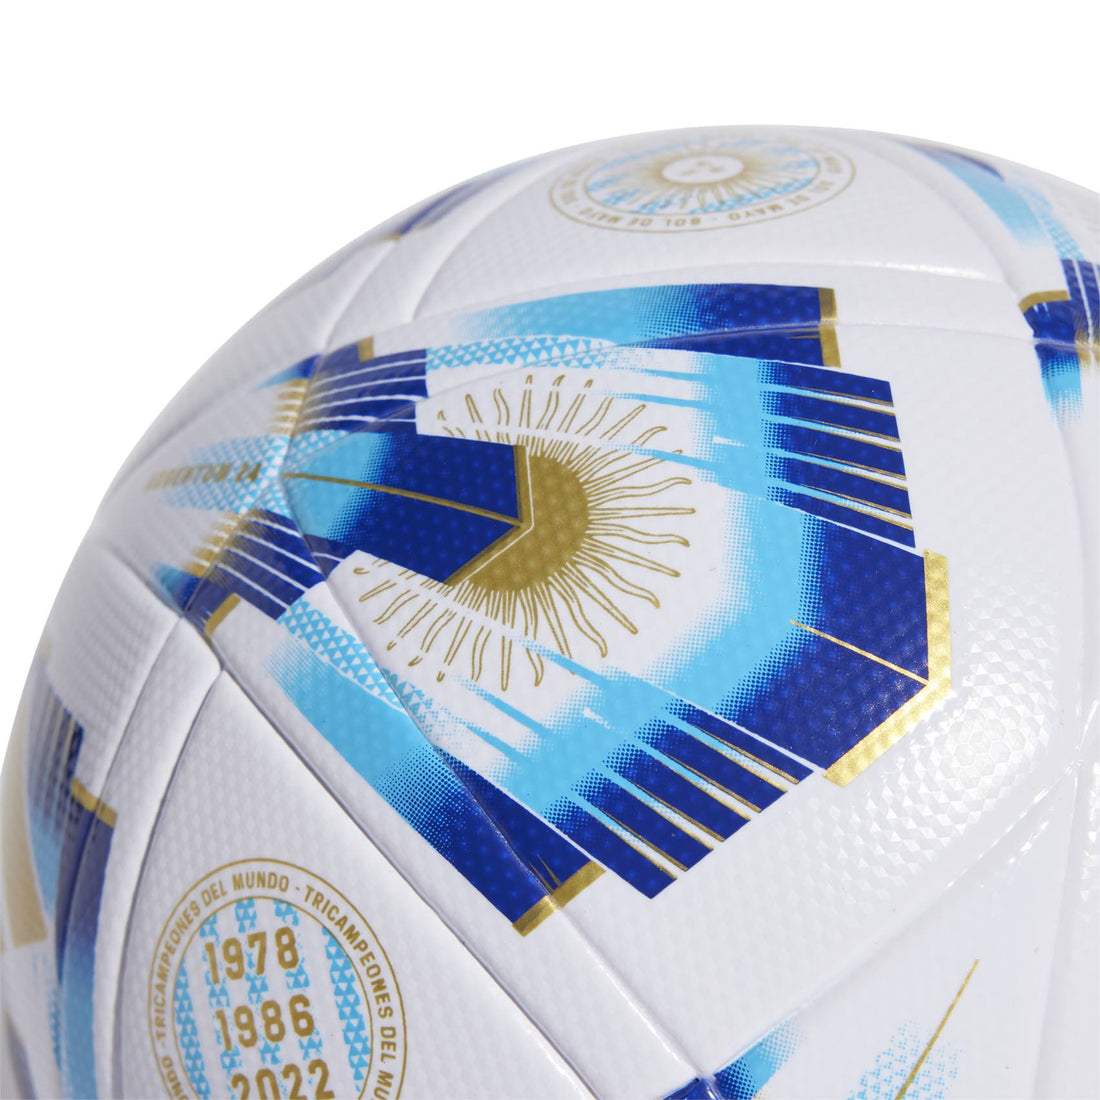 Argentina 24 League Soccer Ball